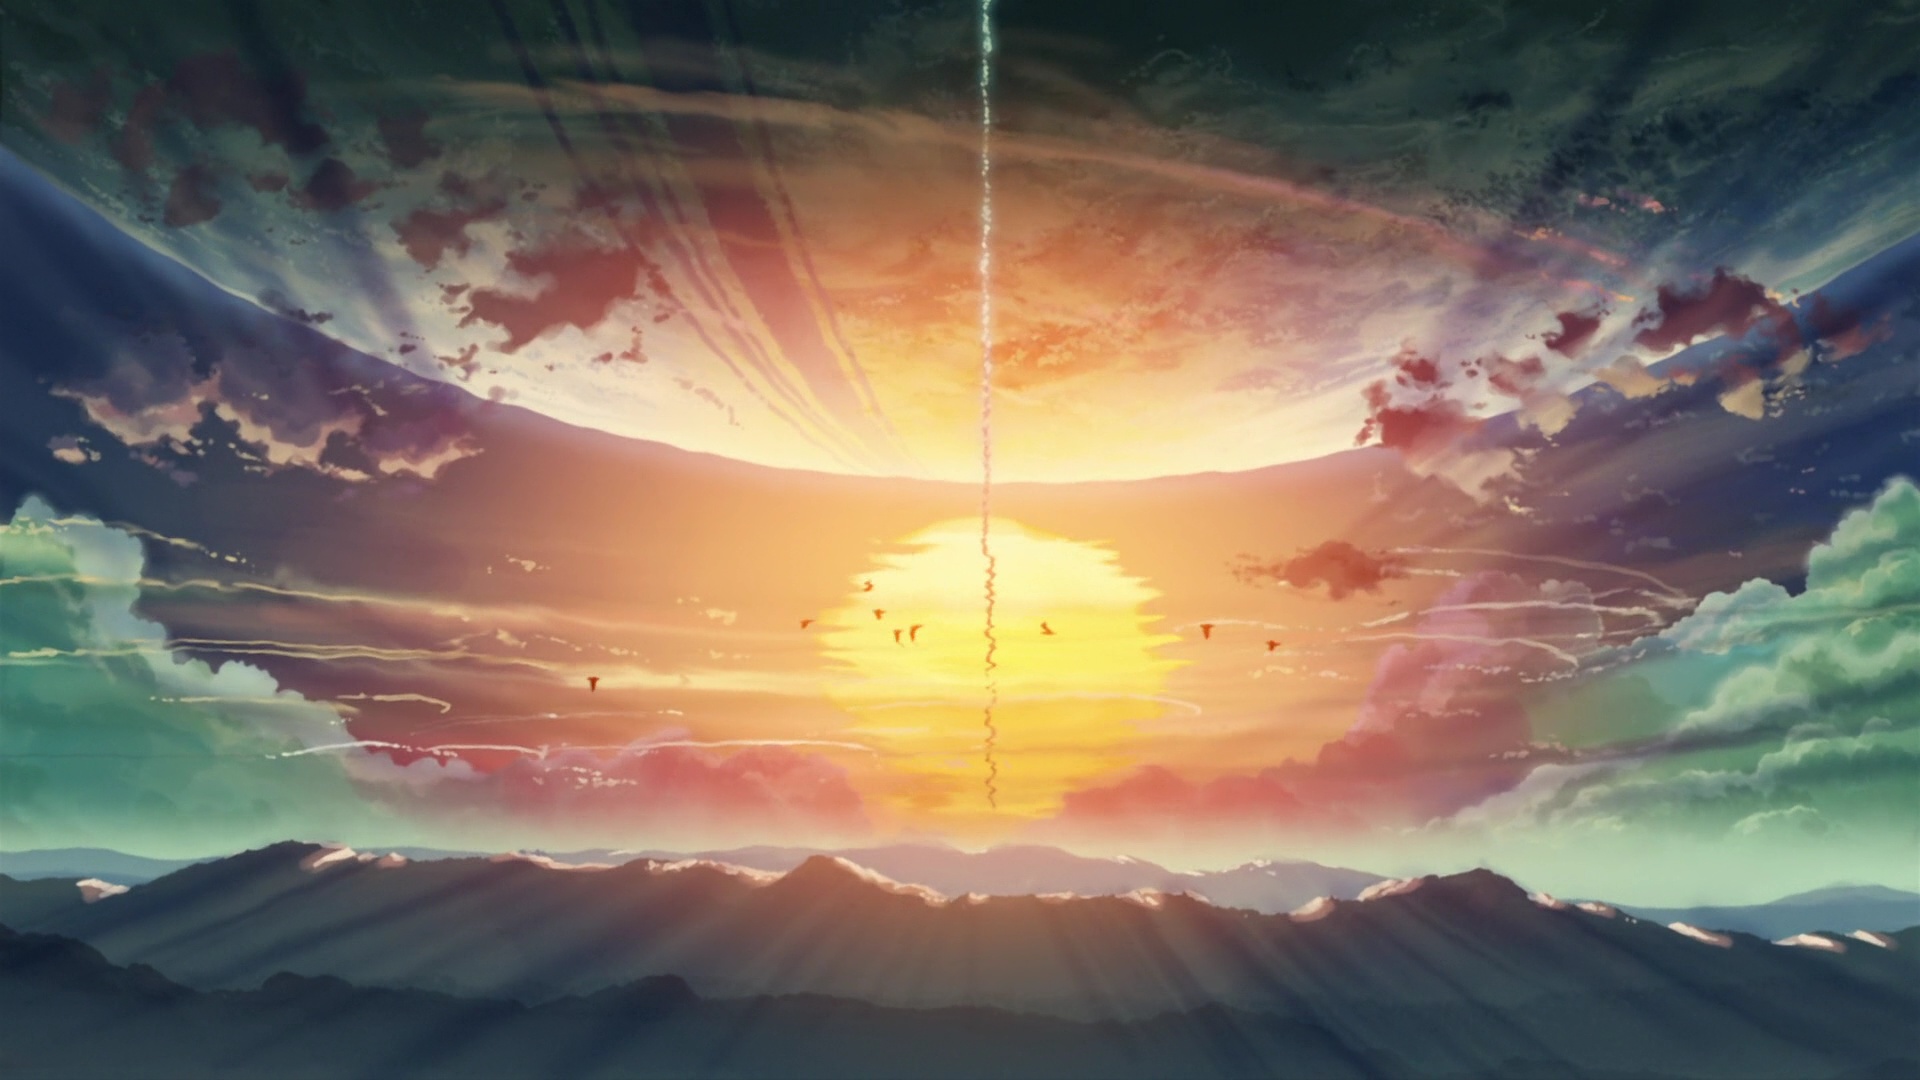 Free Anime Landscape Backgrounds | PixelsTalk.Net